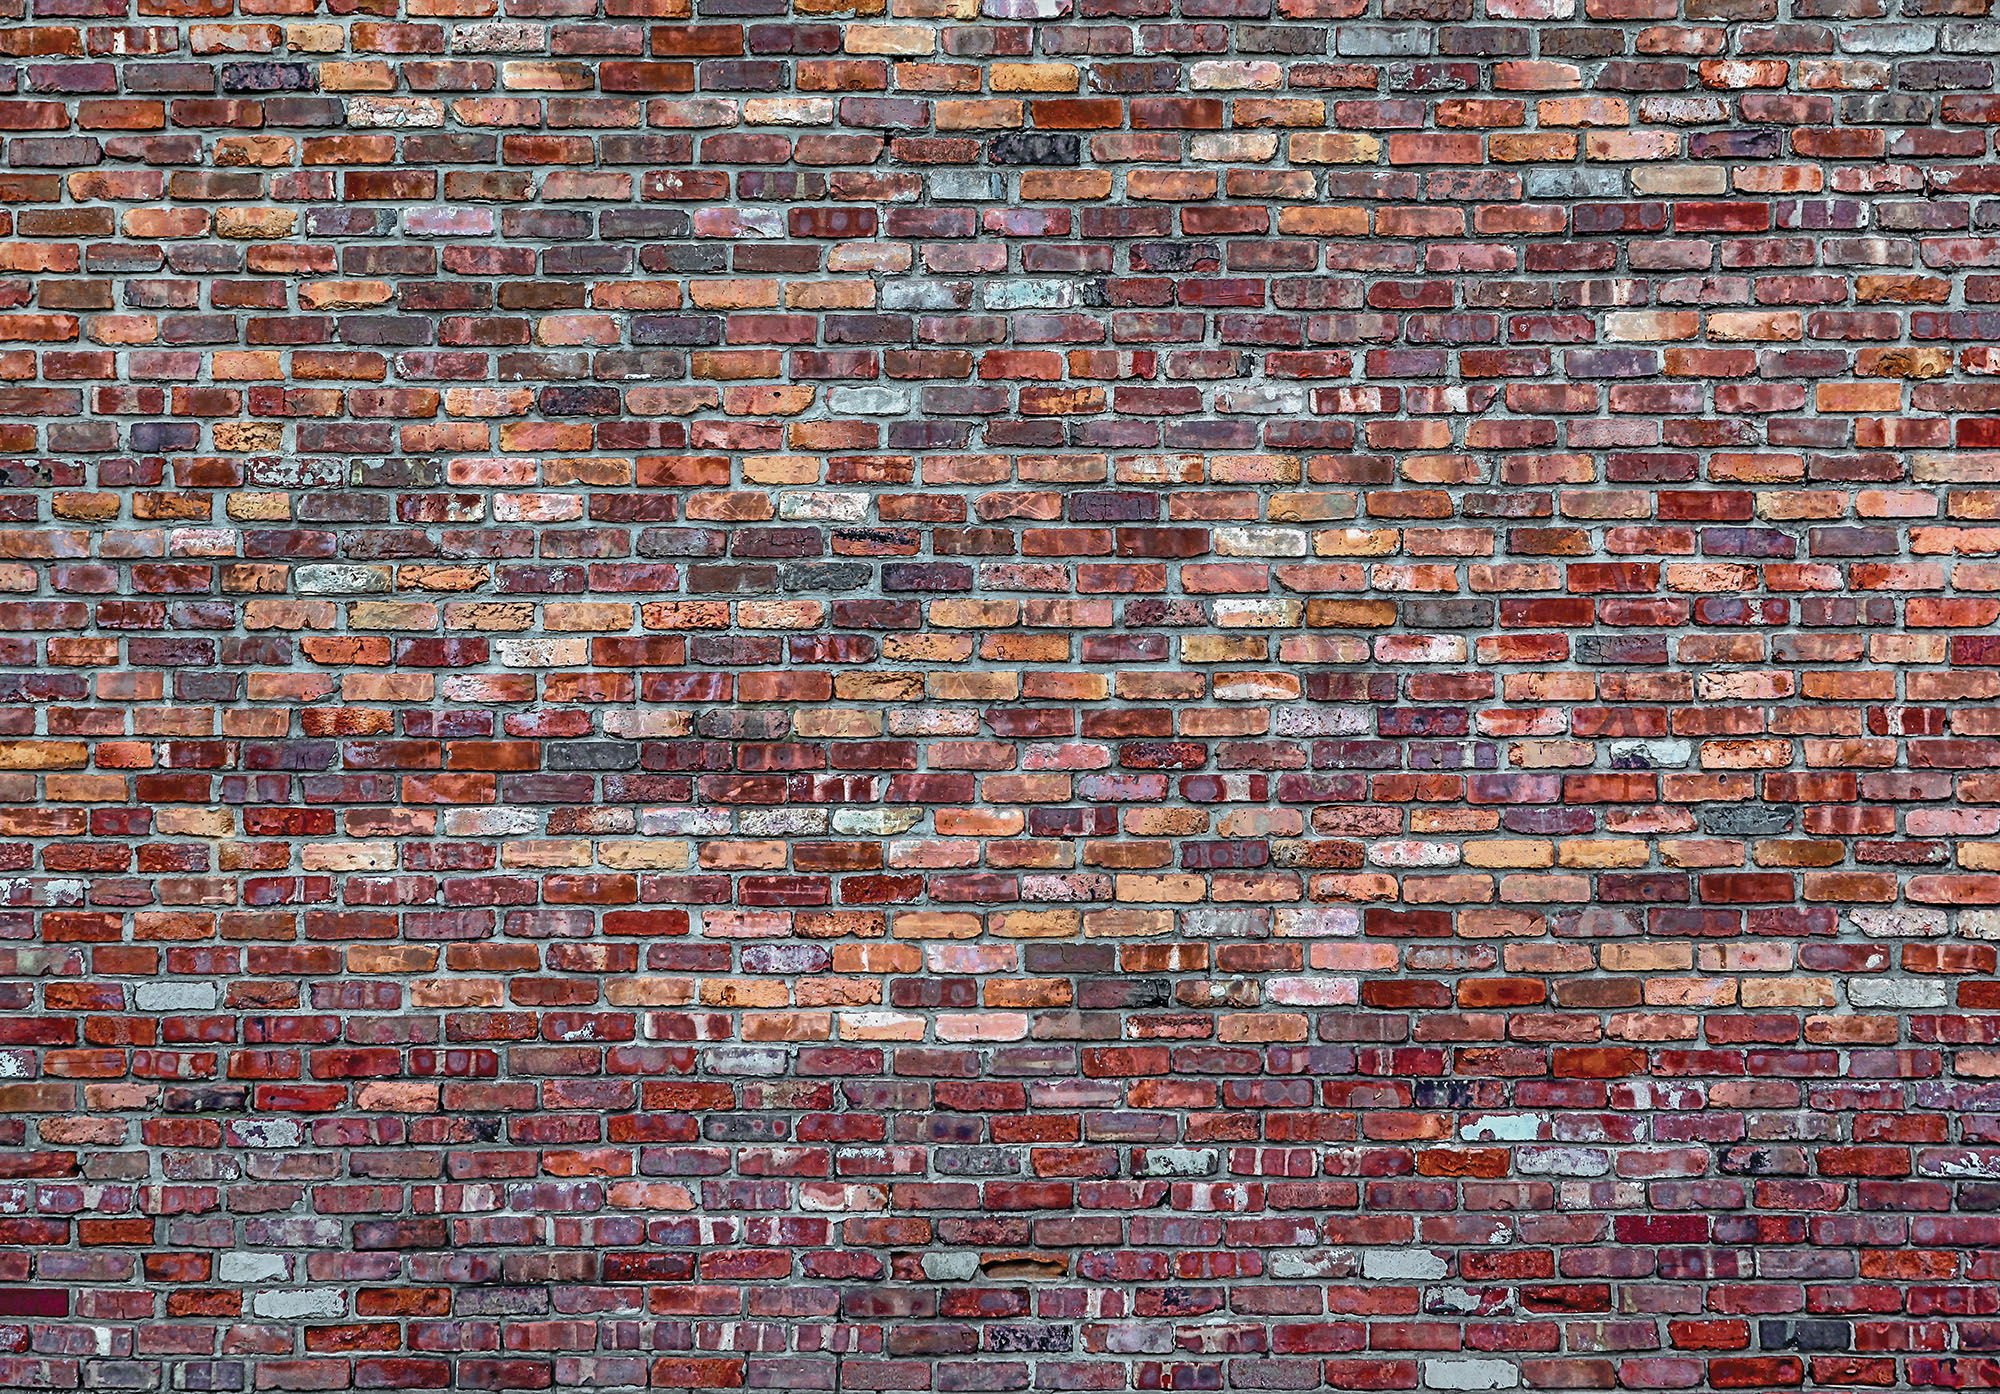 Fotomurale in TNT: Muro di mattoni (4) - 254x368 cm